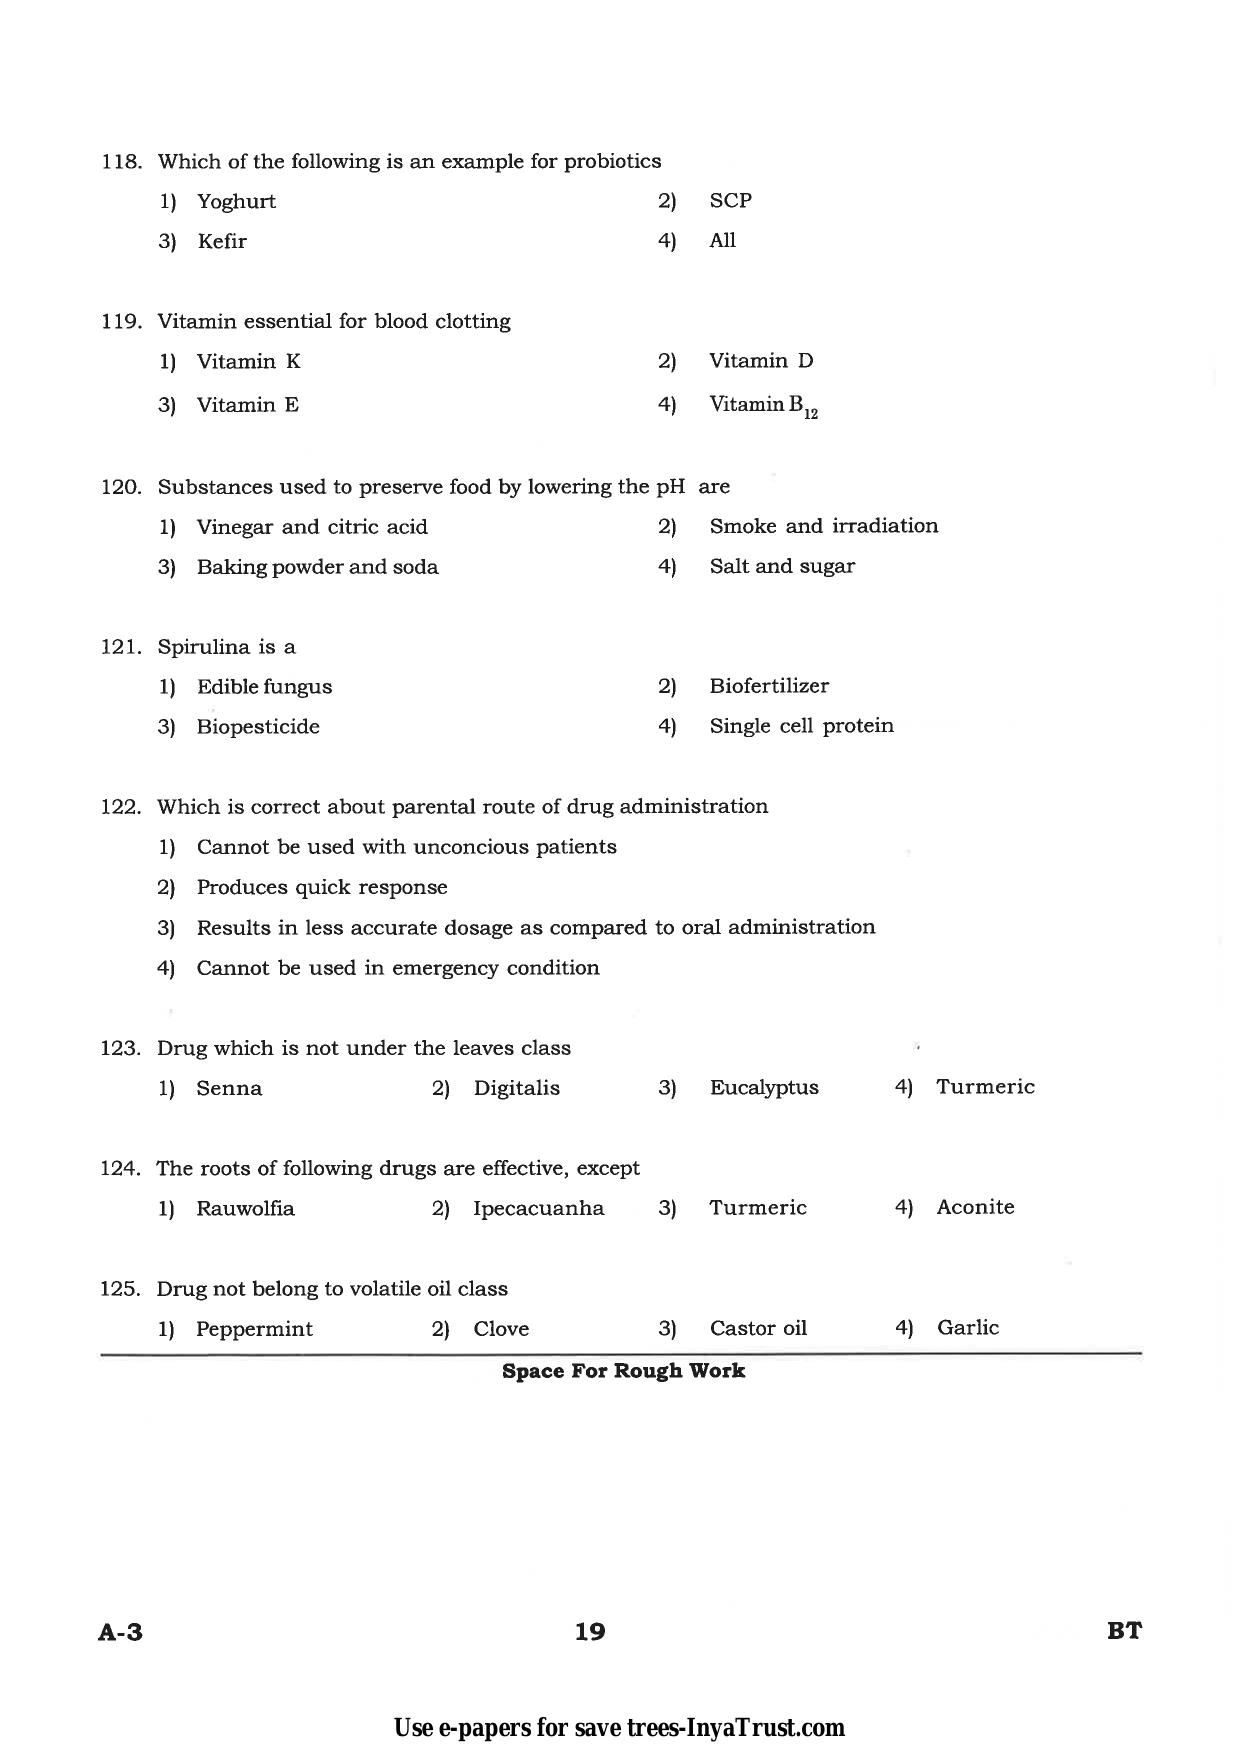 Karnataka Diploma CET- 2015 Biotechnology Question Paper - Page 19